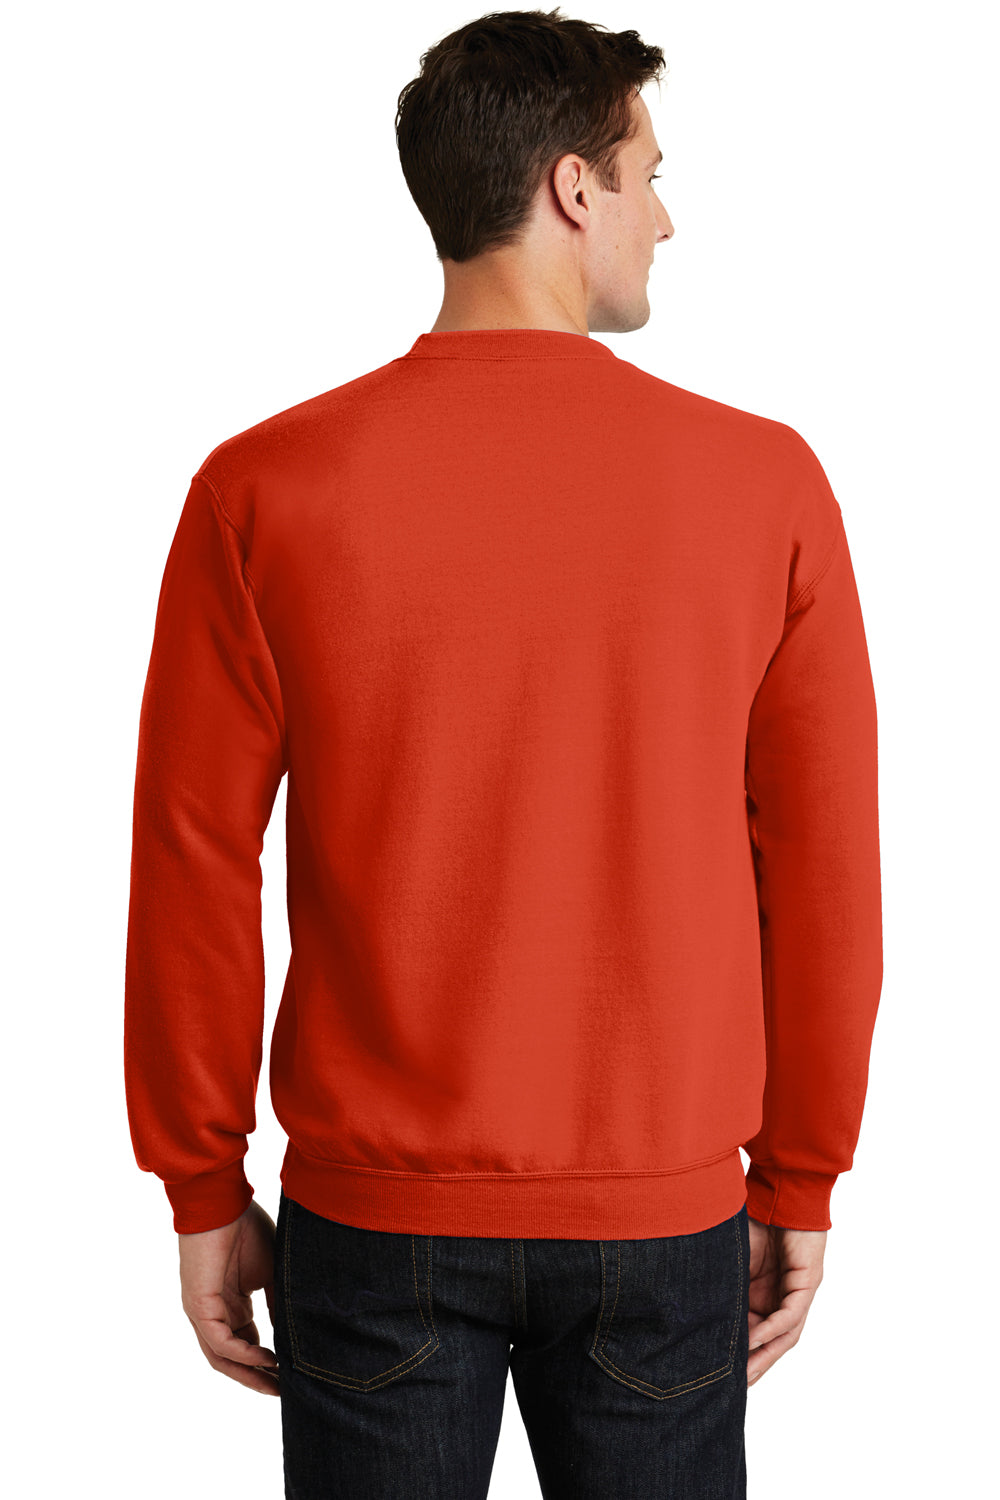 Port & Company PC78 Mens Core Fleece Crewneck Sweatshirt Orange Back